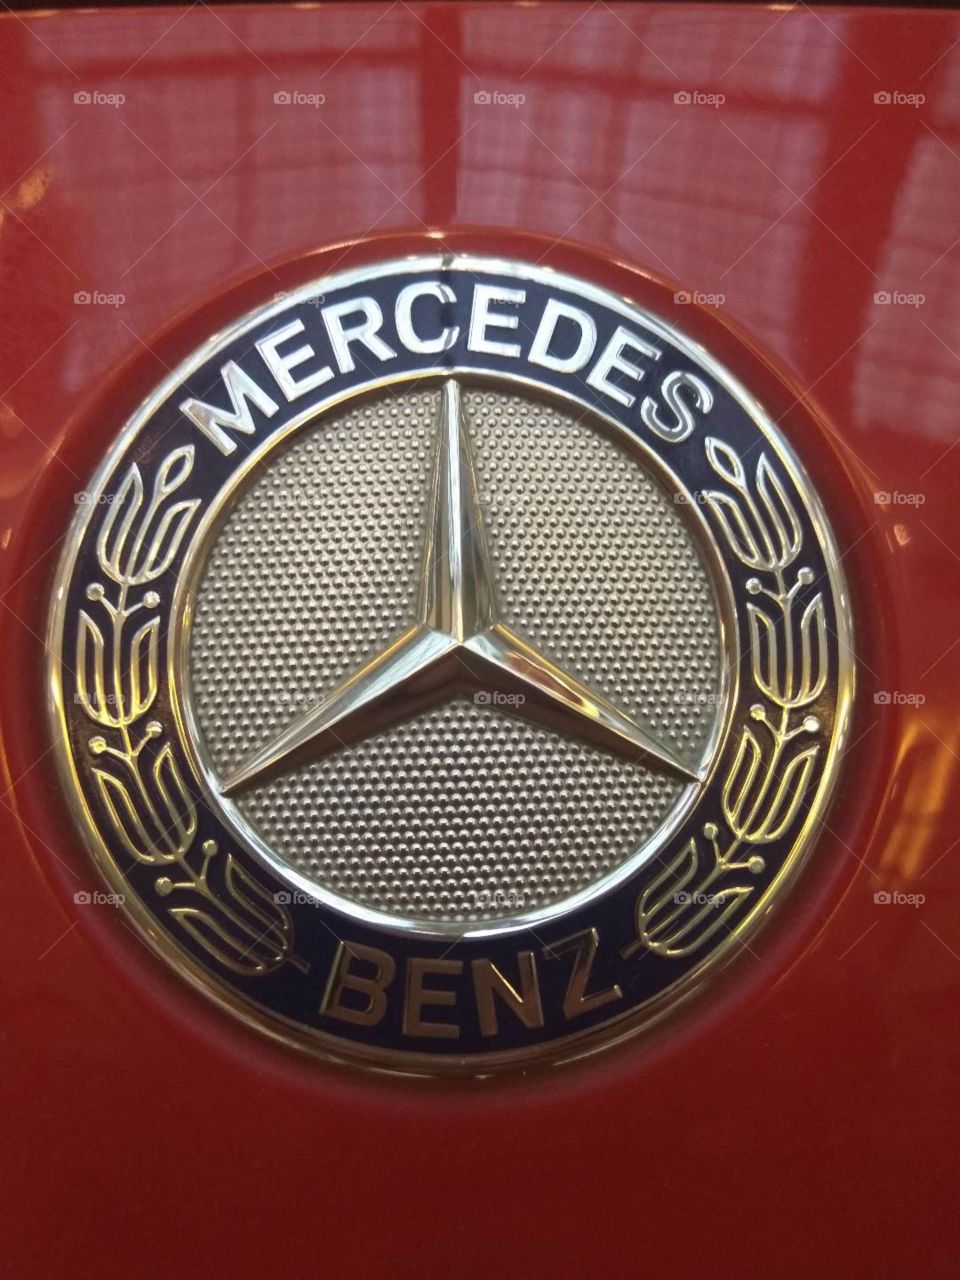 Mercedes benz logo picture